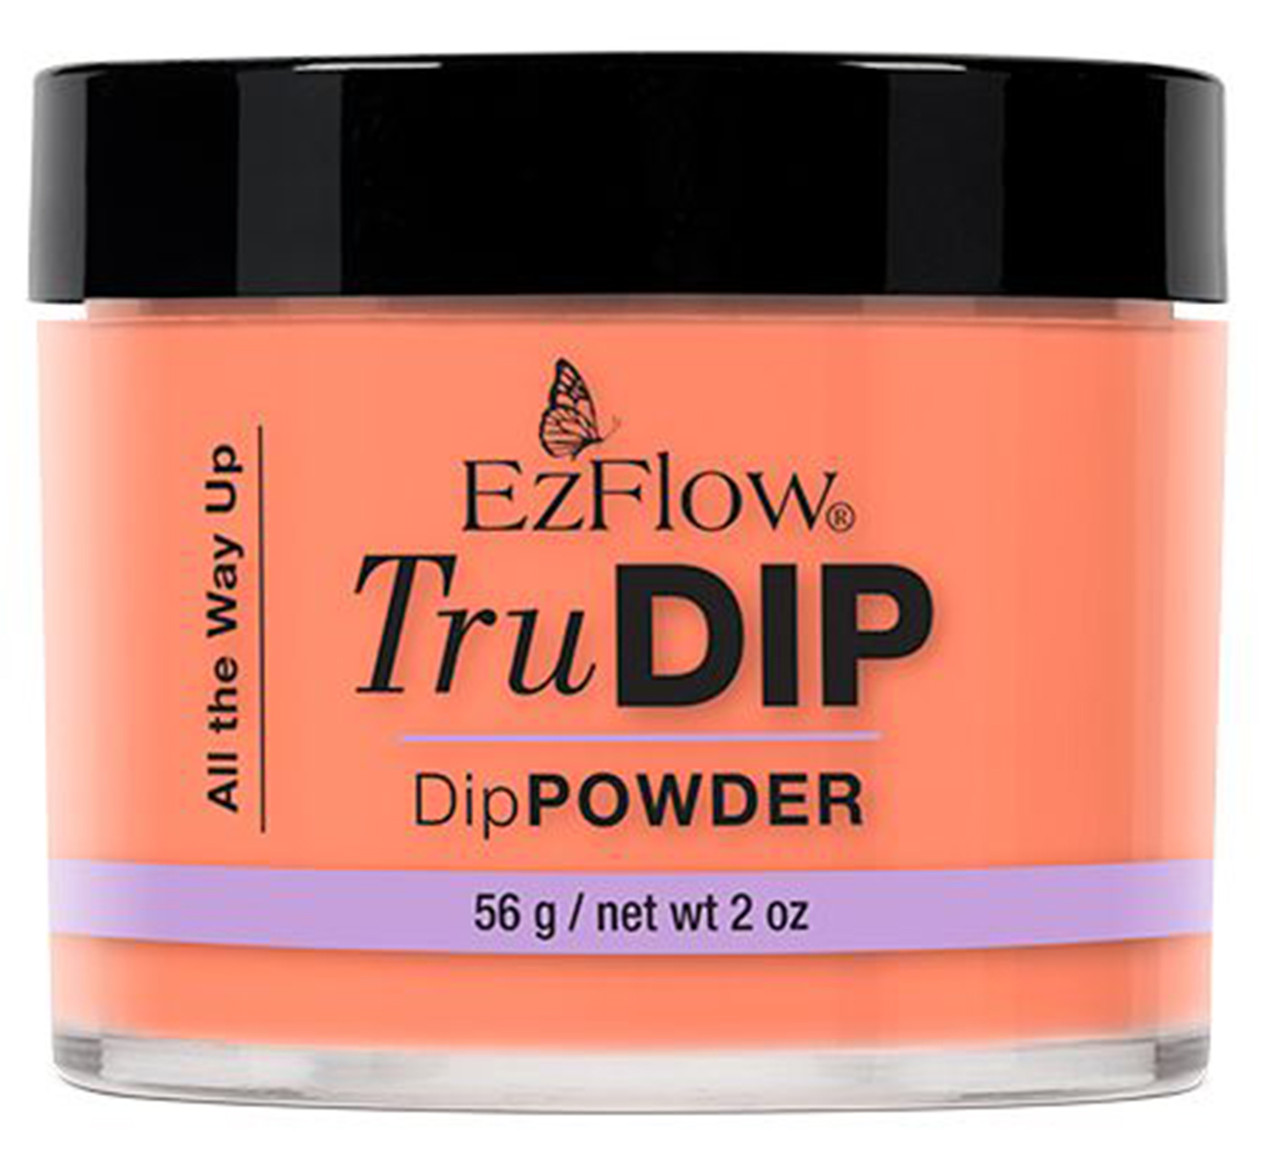 EZ TruDIP Dipping Powder All the Way Up - 2 oz